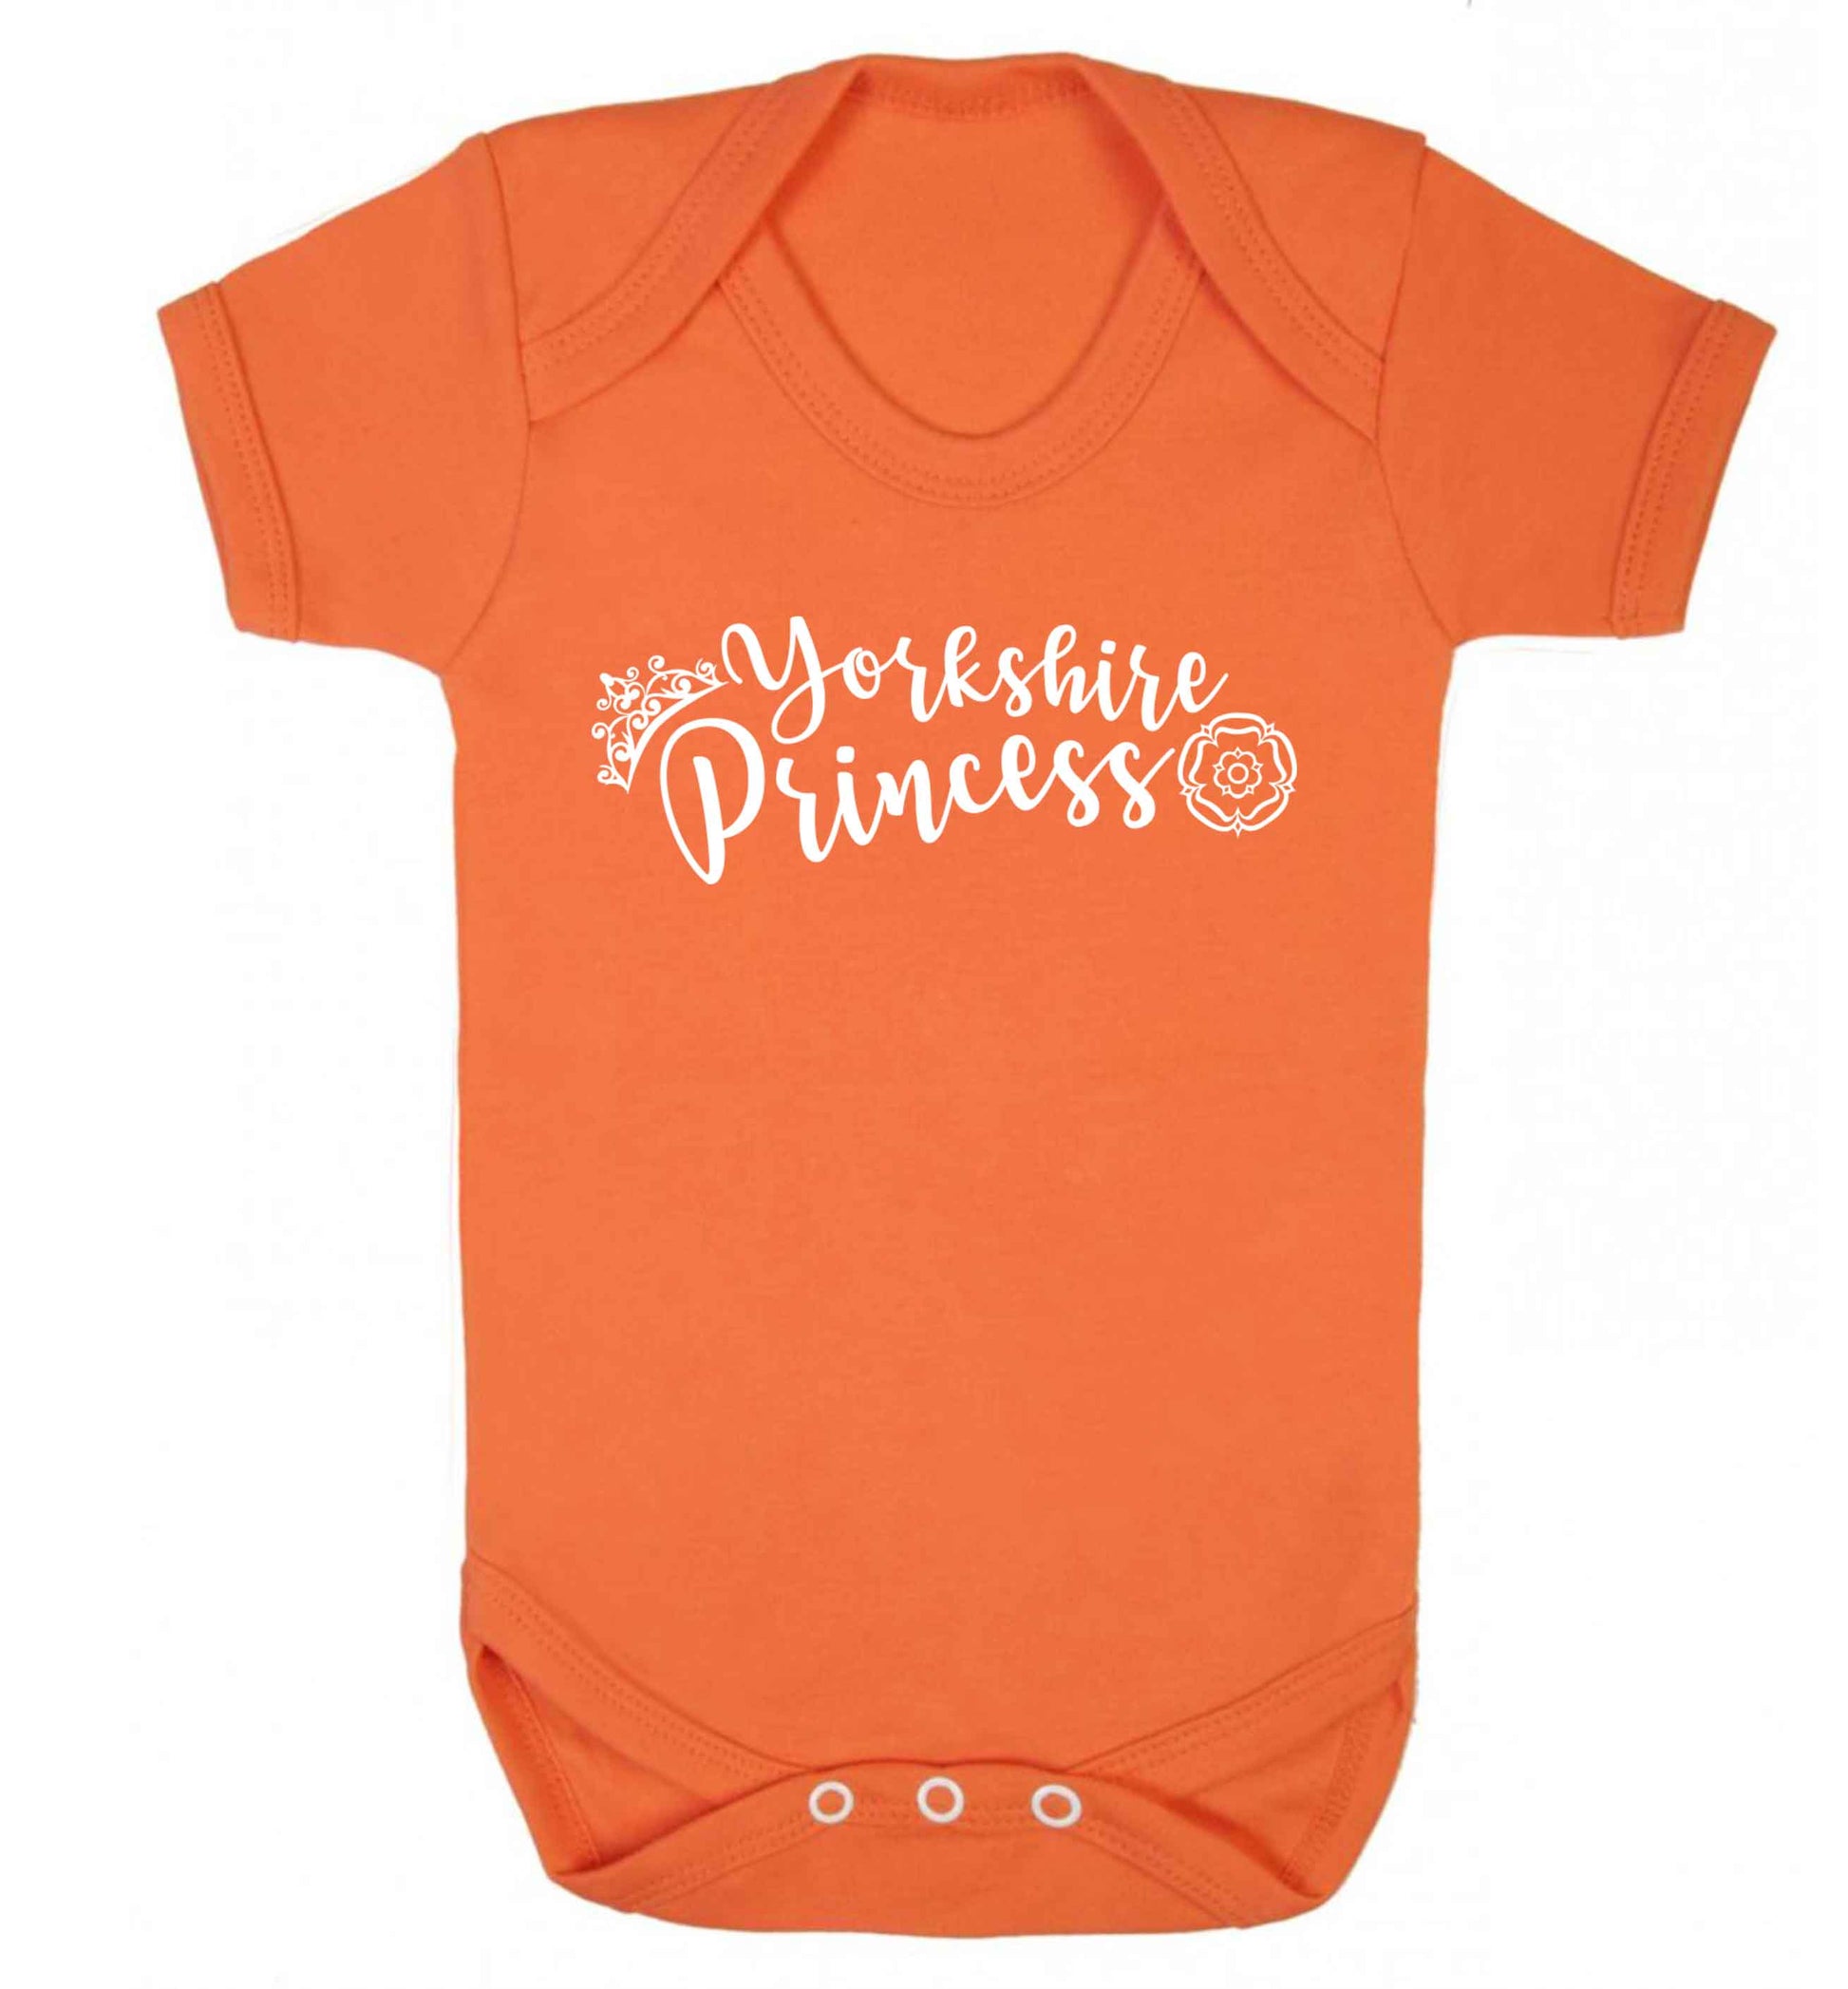 Yorkshire Princess Baby Vest orange 18-24 months